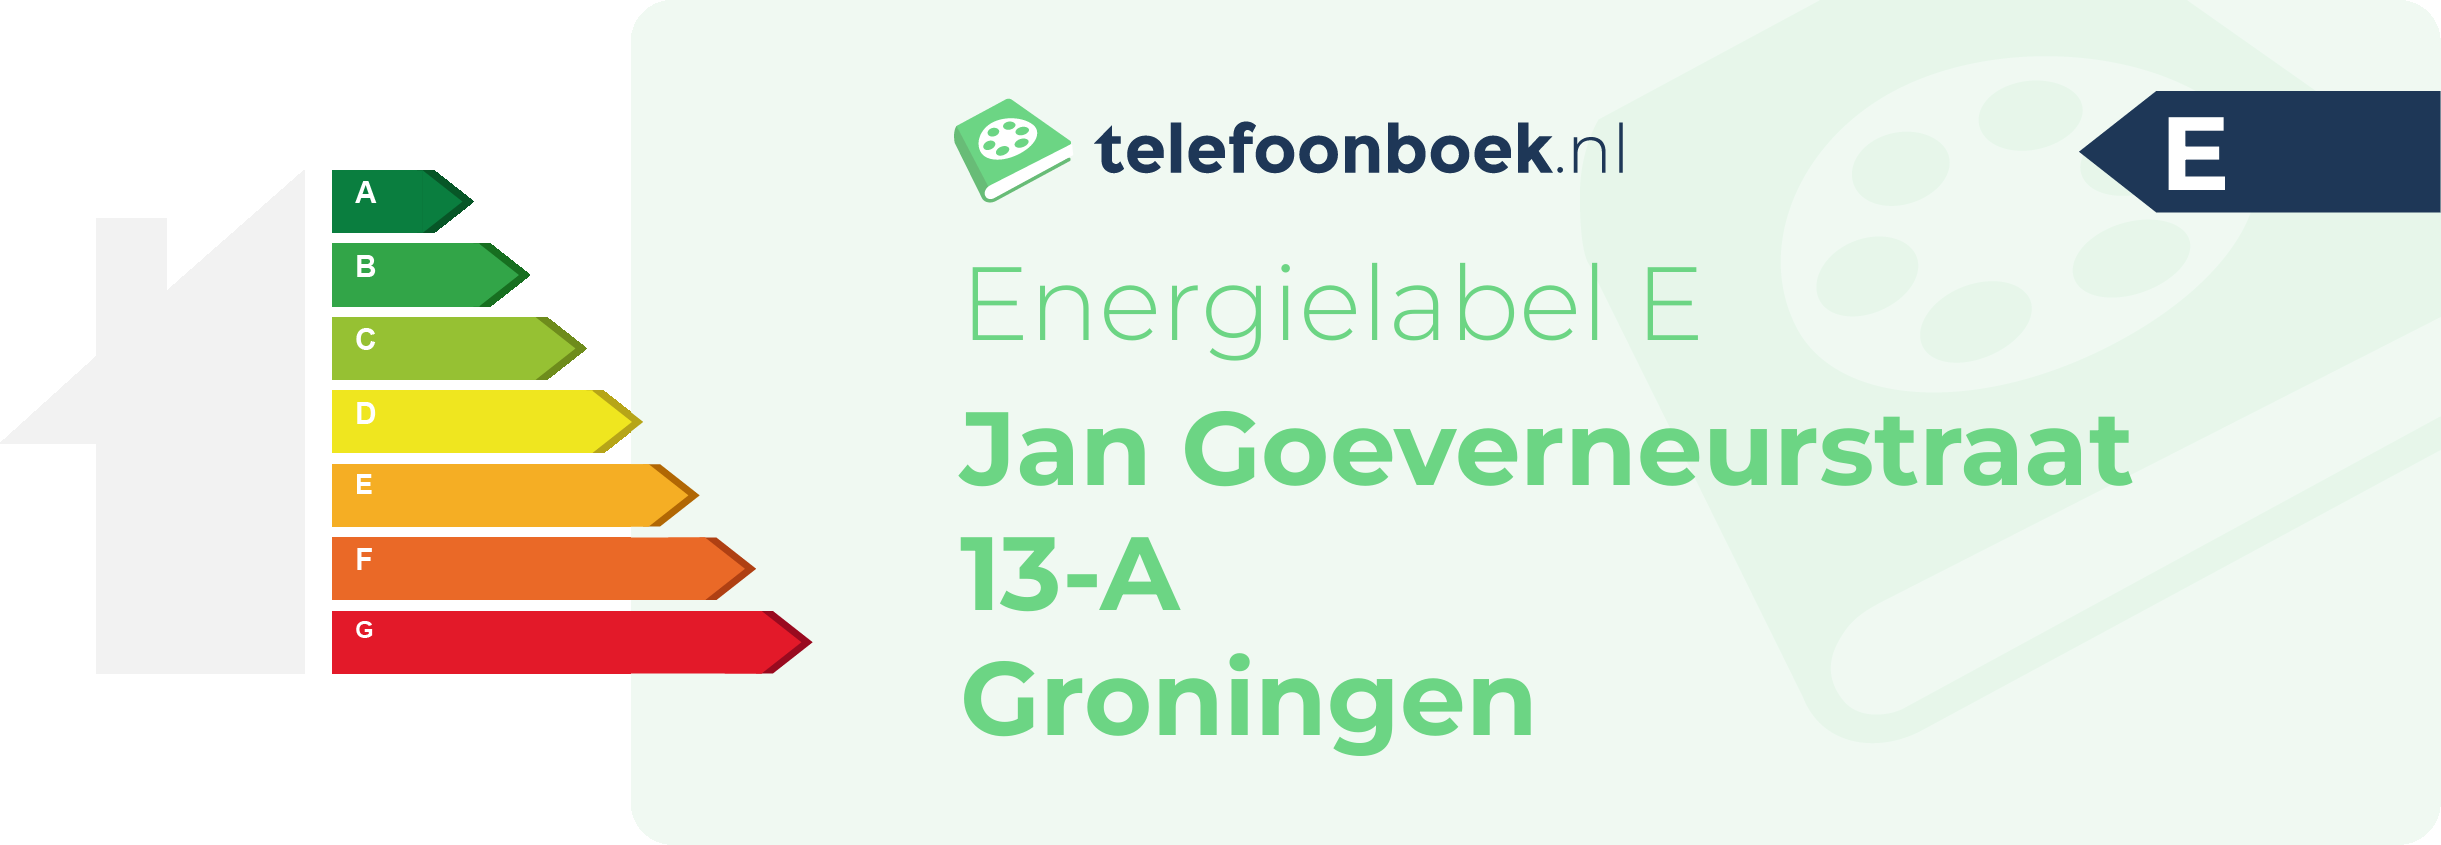 Energielabel Jan Goeverneurstraat 13-A Groningen